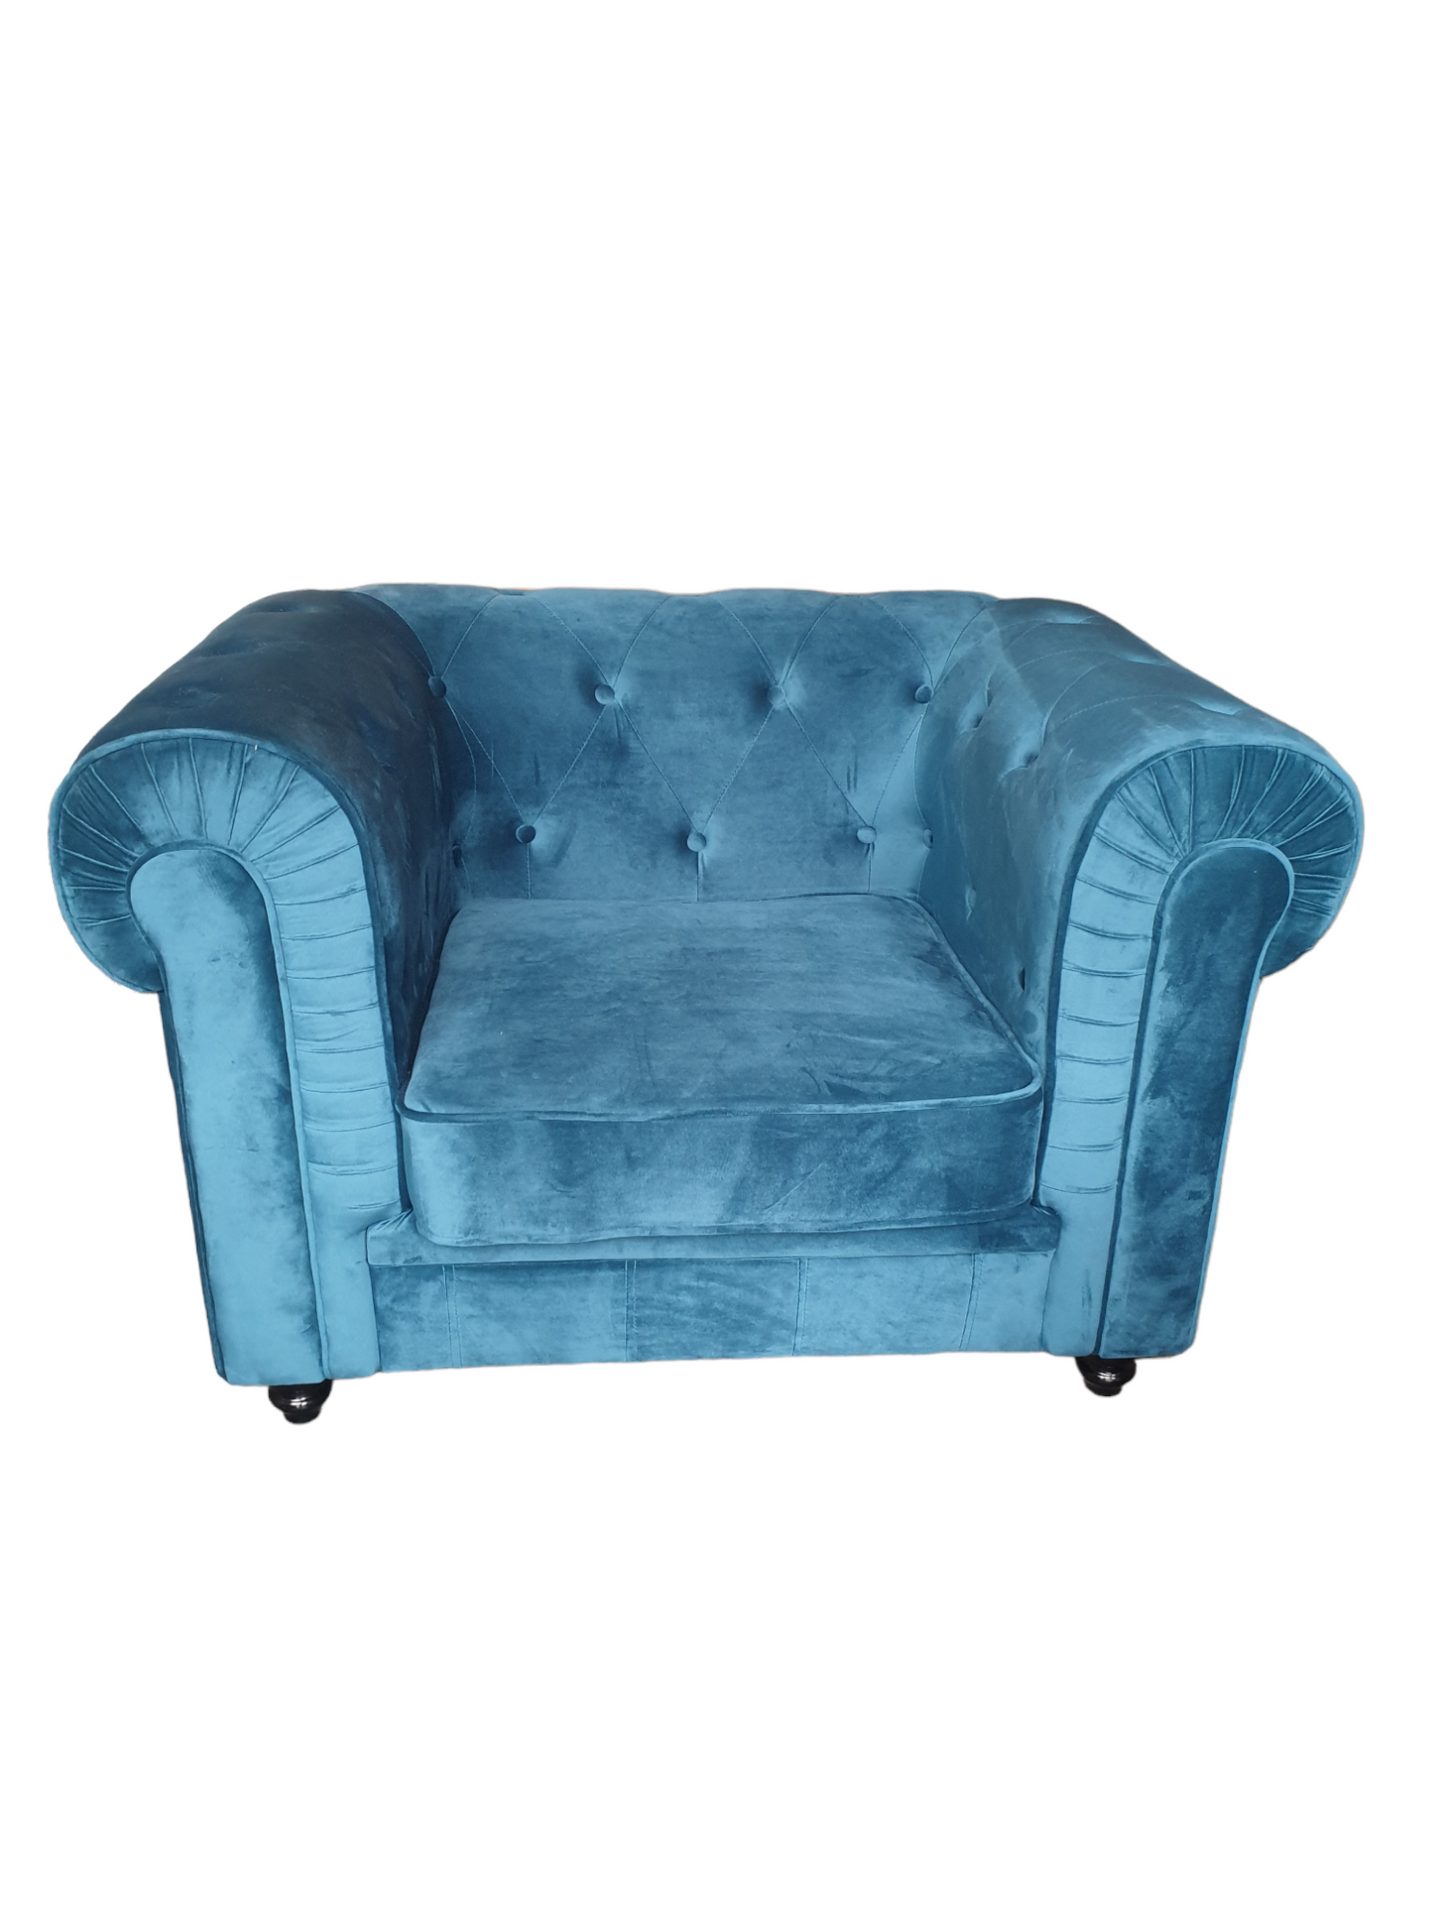 Chesterfield fauteuil velvet blauw